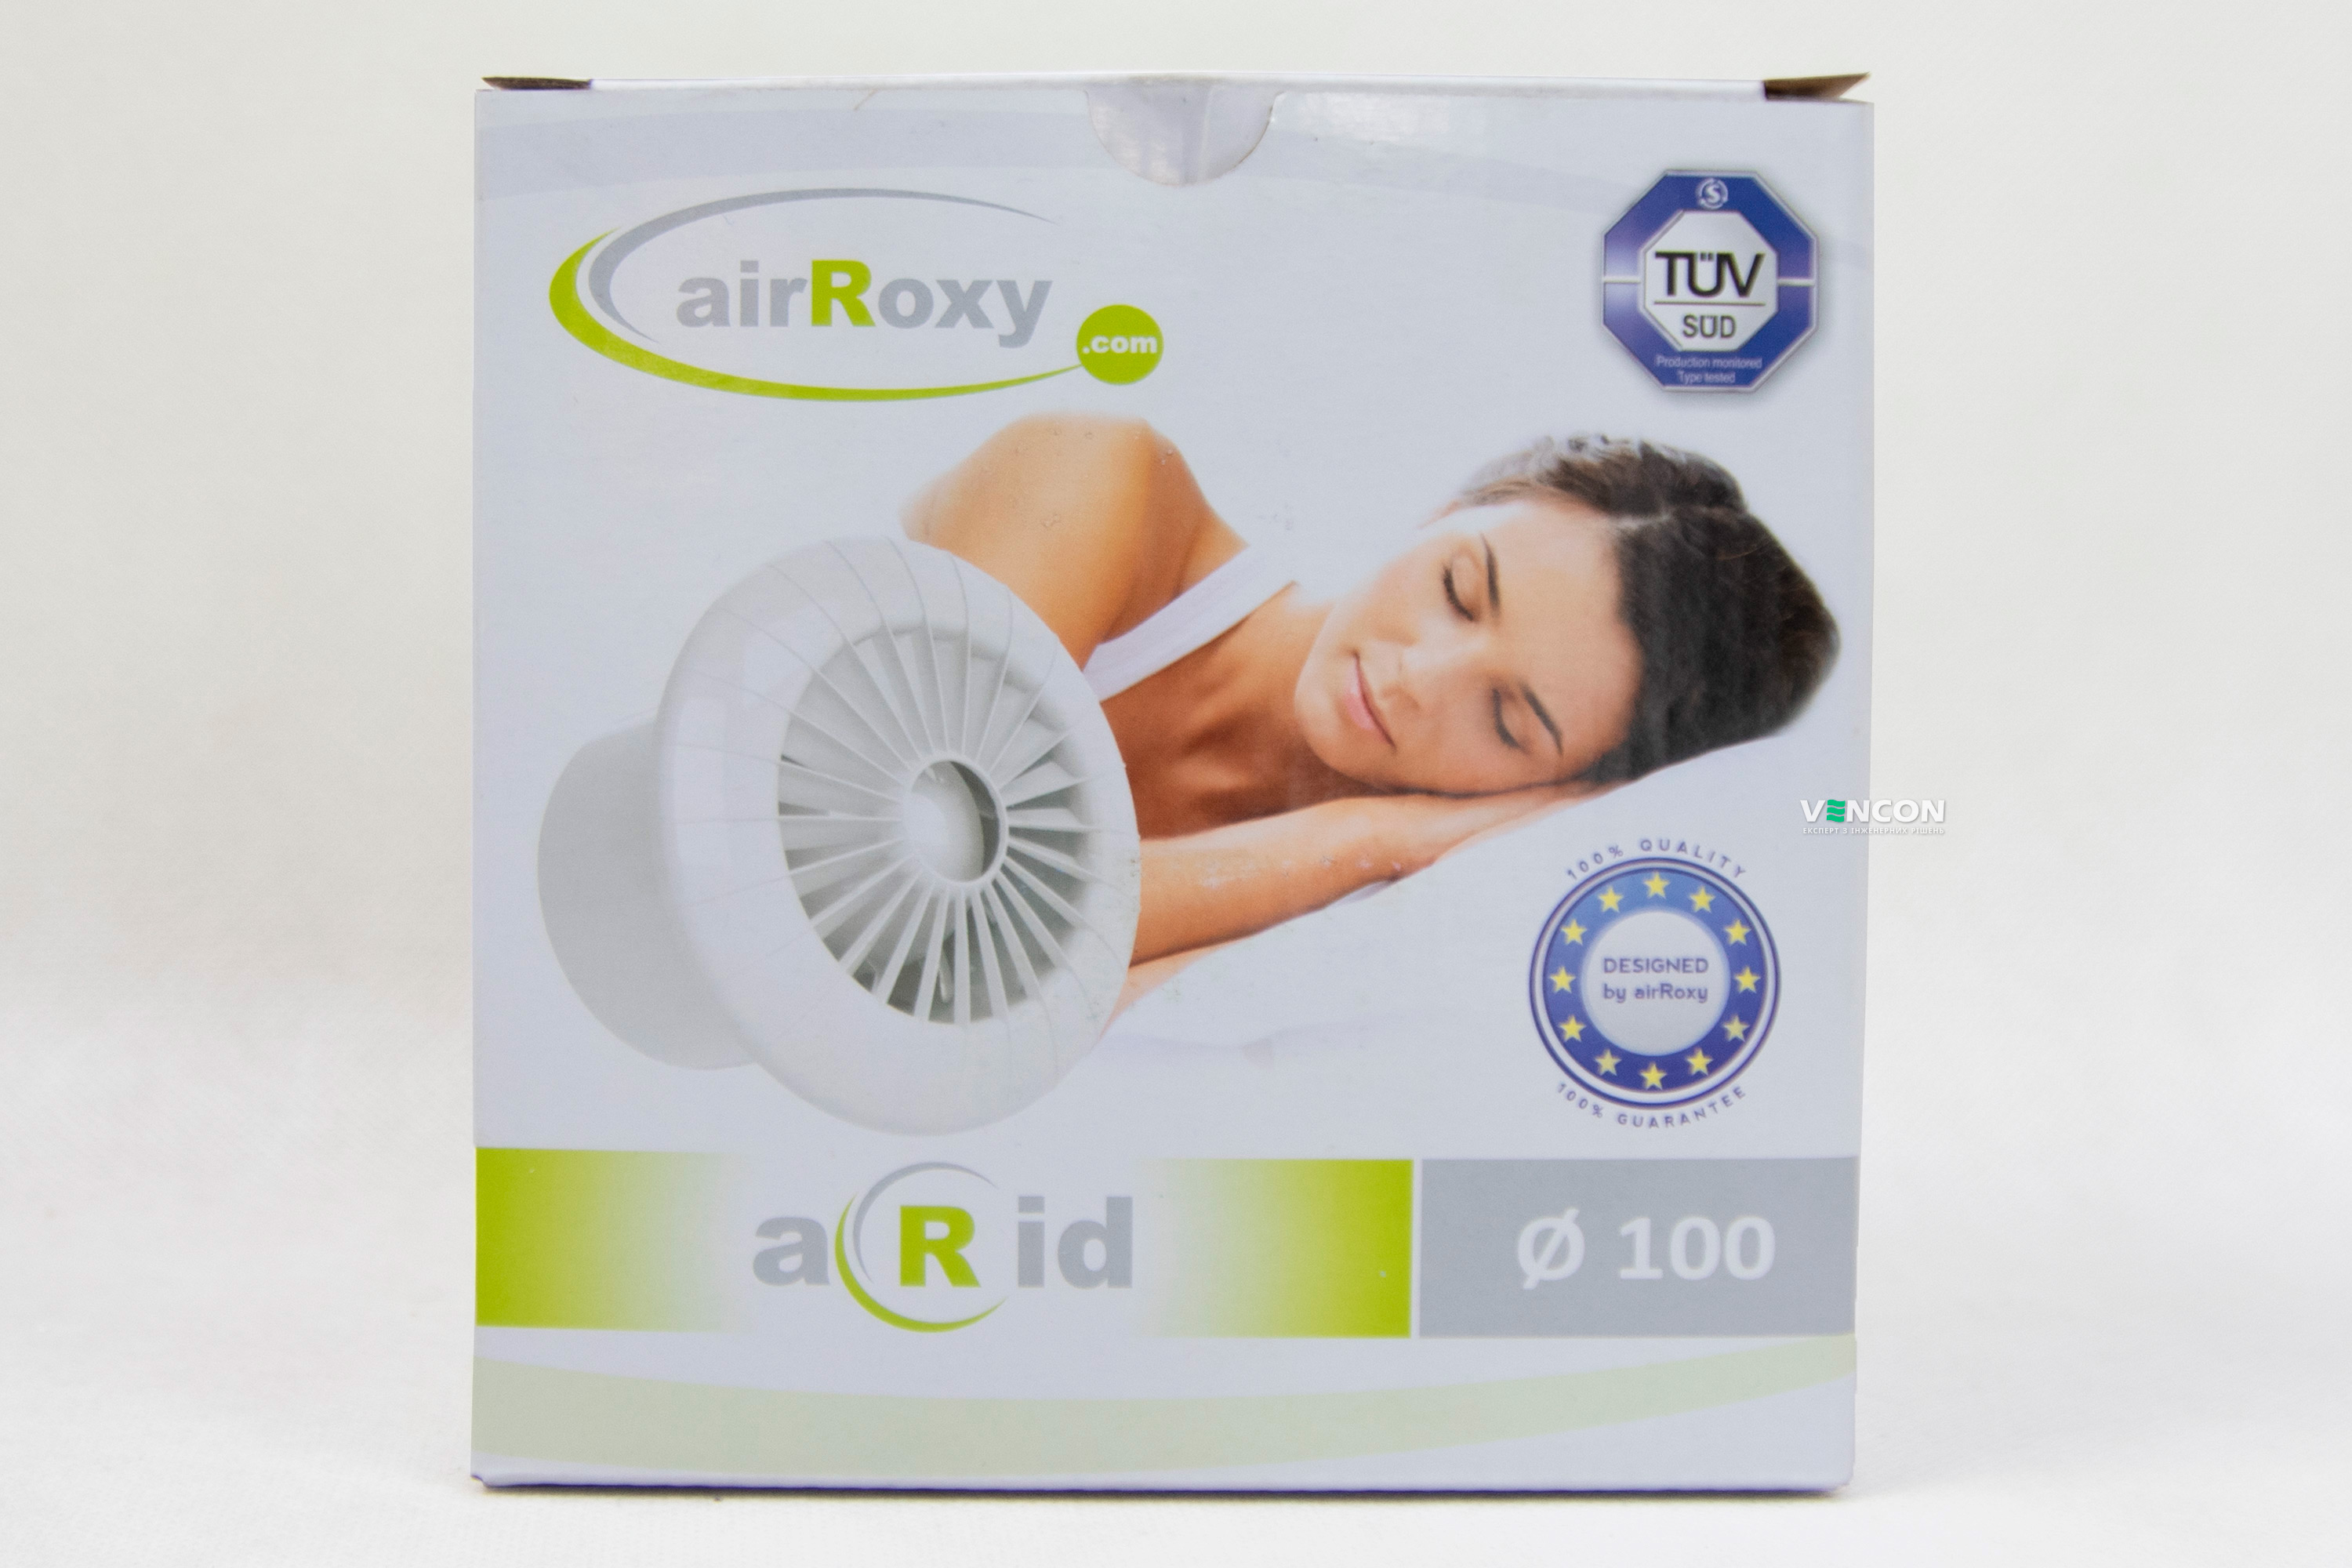 Вытяжной вентилятор AirRoxy aRid 100 BB (01-040) характеристики - фотография 7